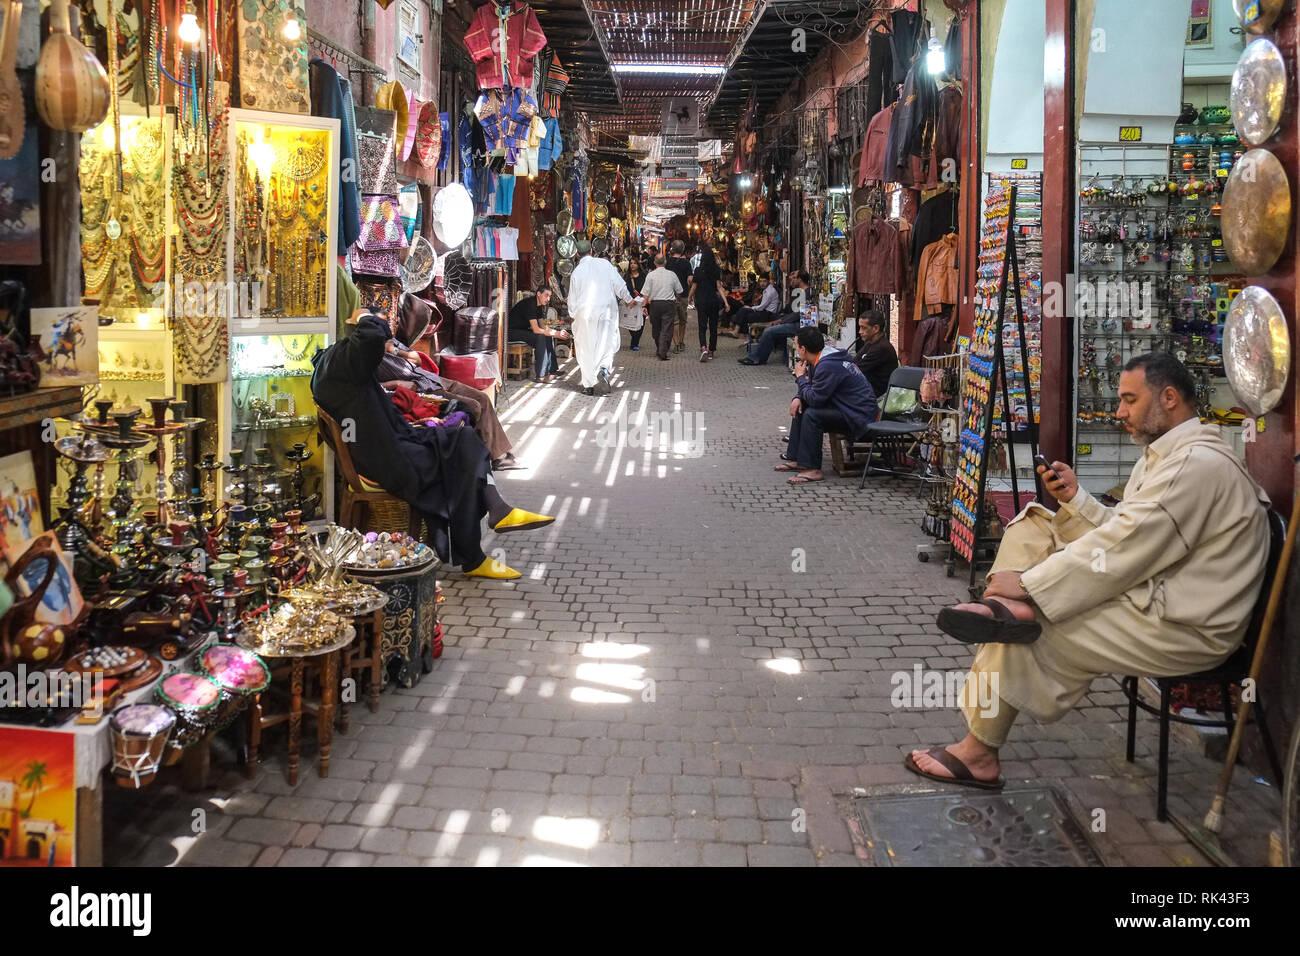 Souk market in Marrakech, Morocco Stock Photo